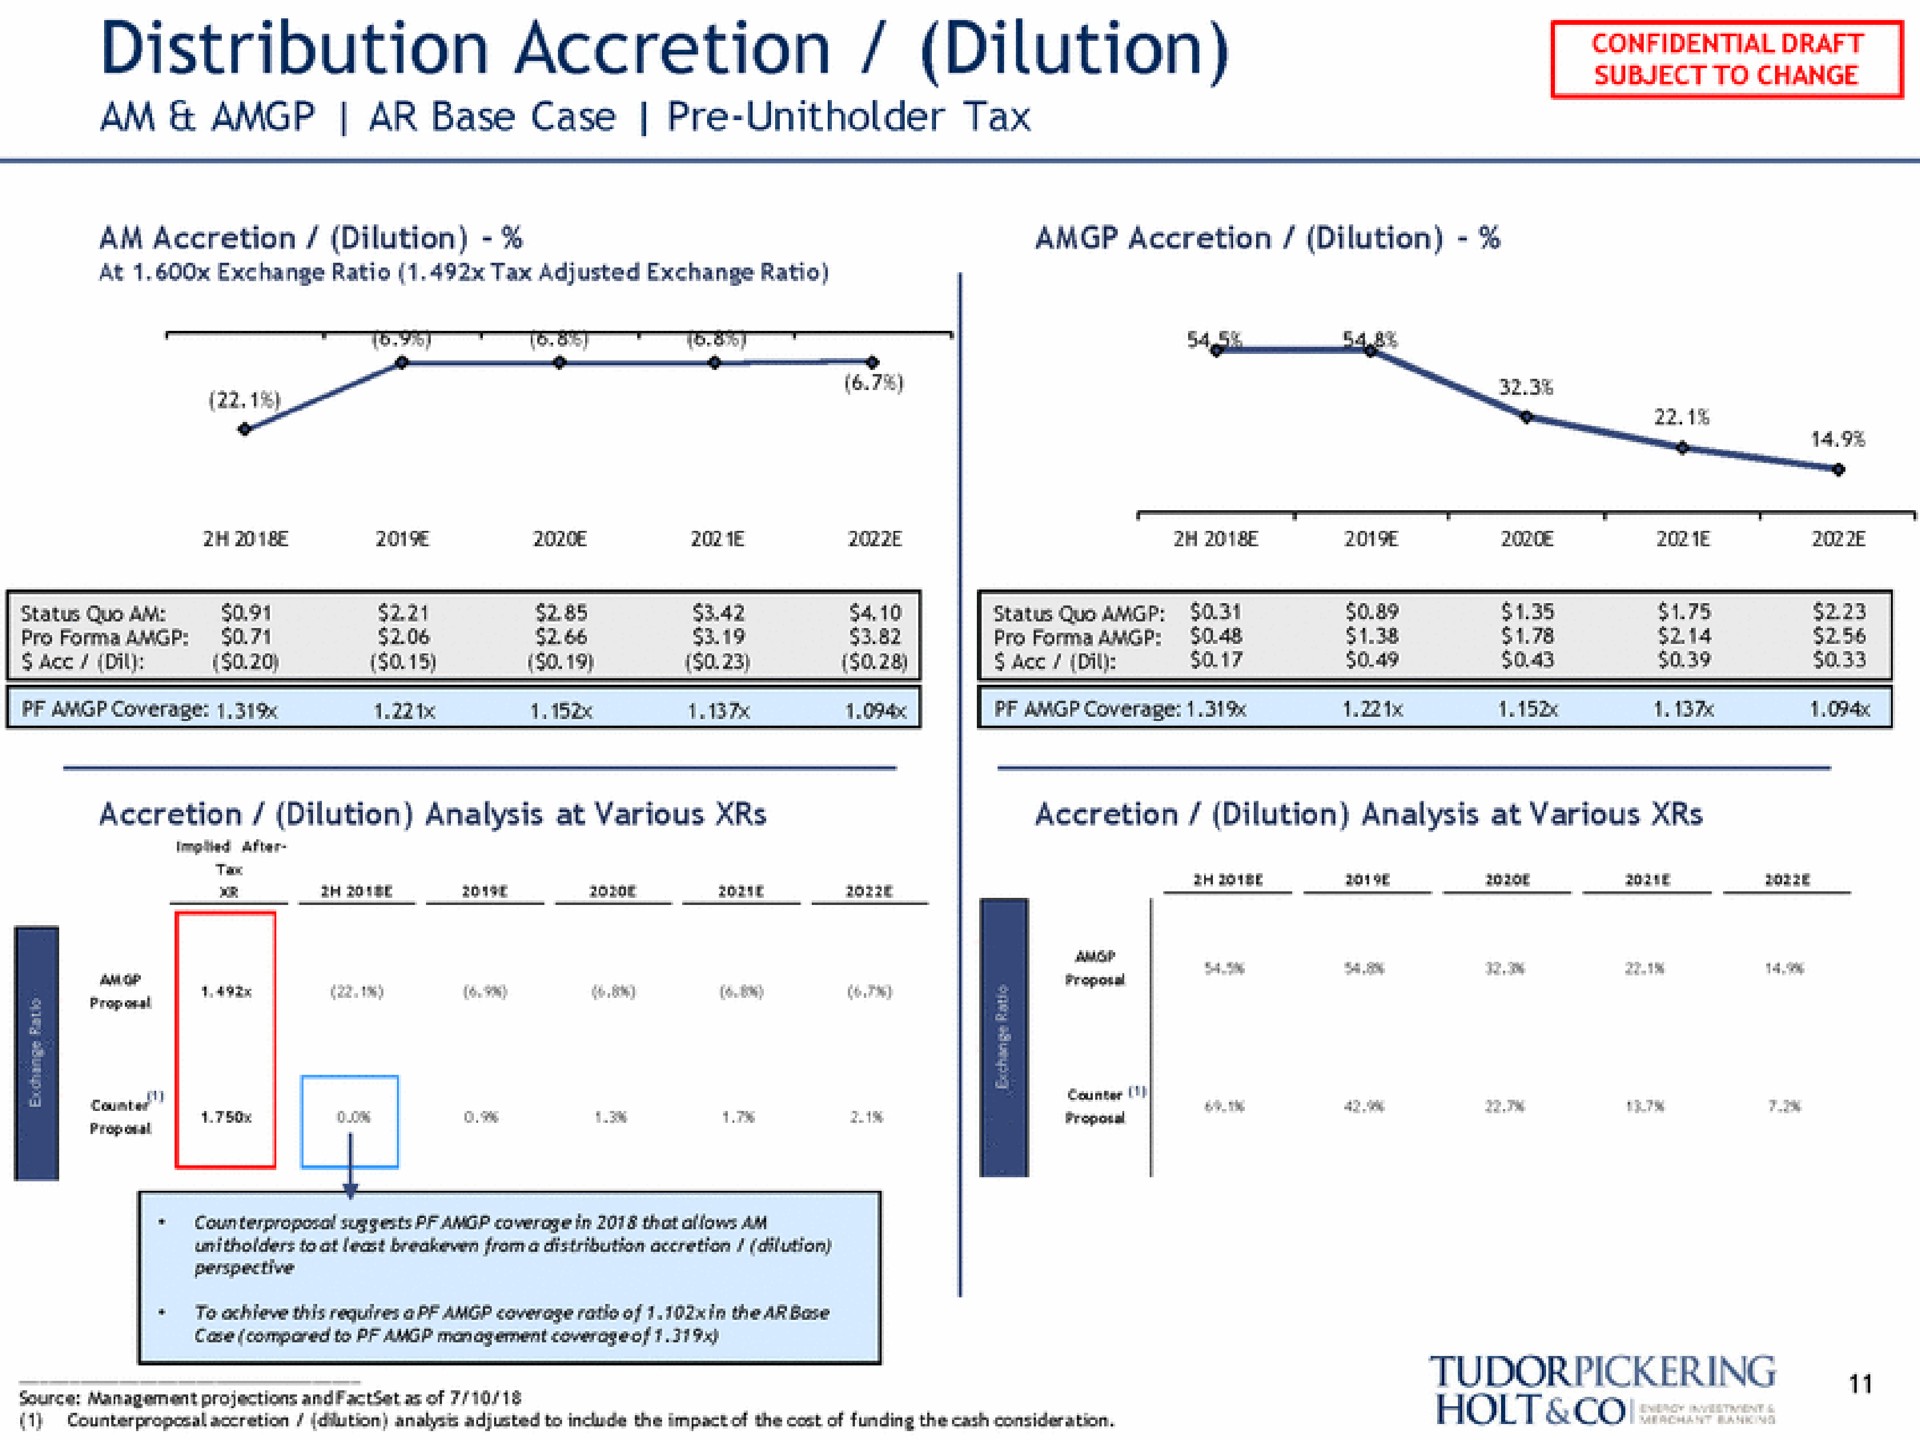 distribution accretion dilution am base case tax | Tudor, Pickering, Holt & Co